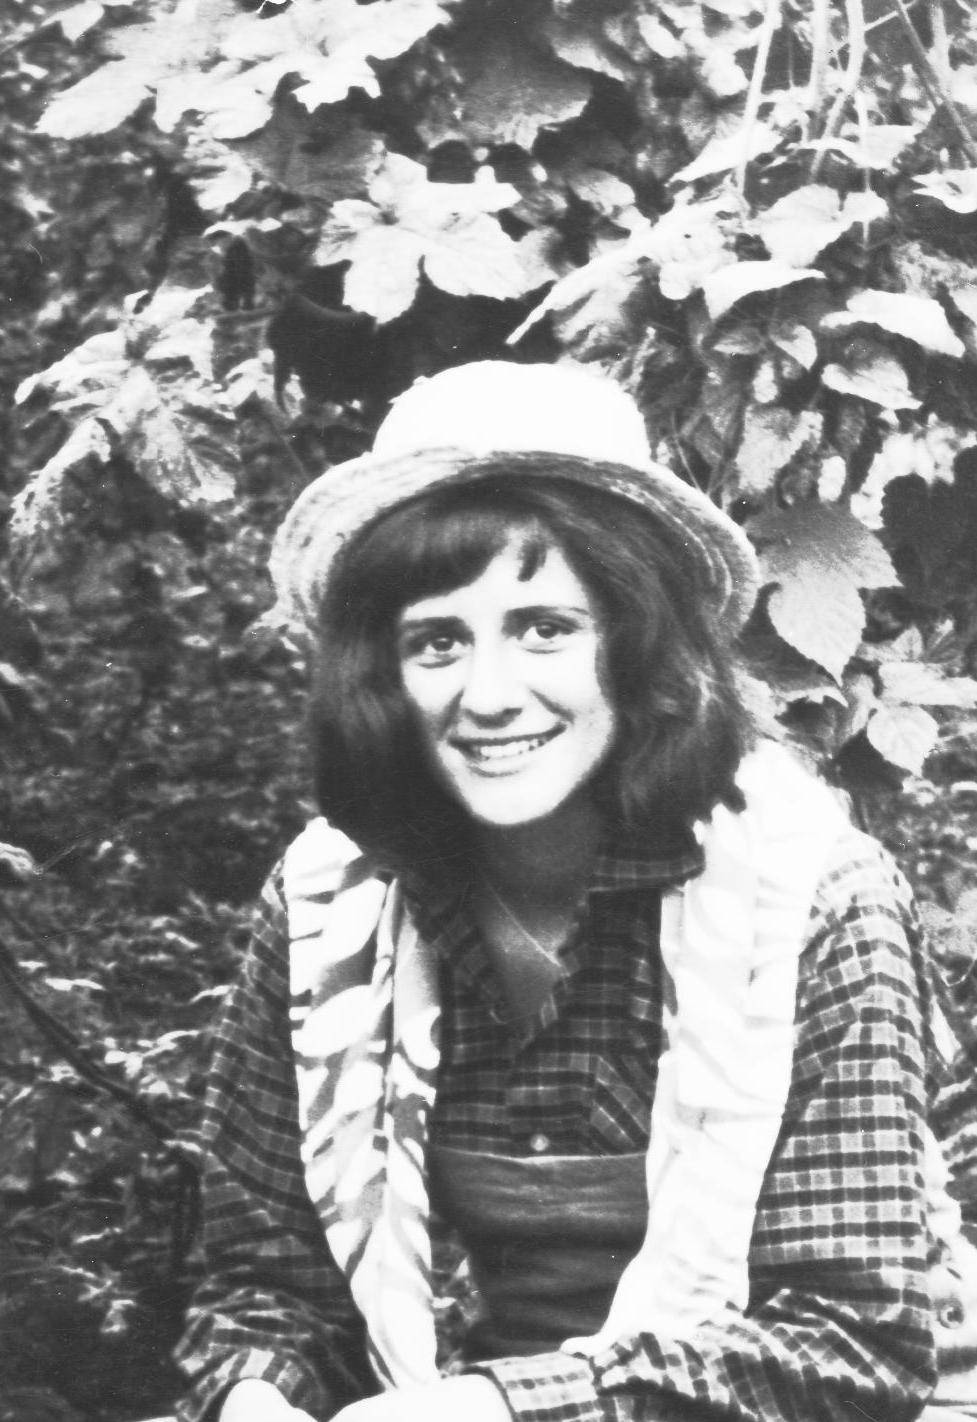 Anna Macková at the hop harvest in 1966